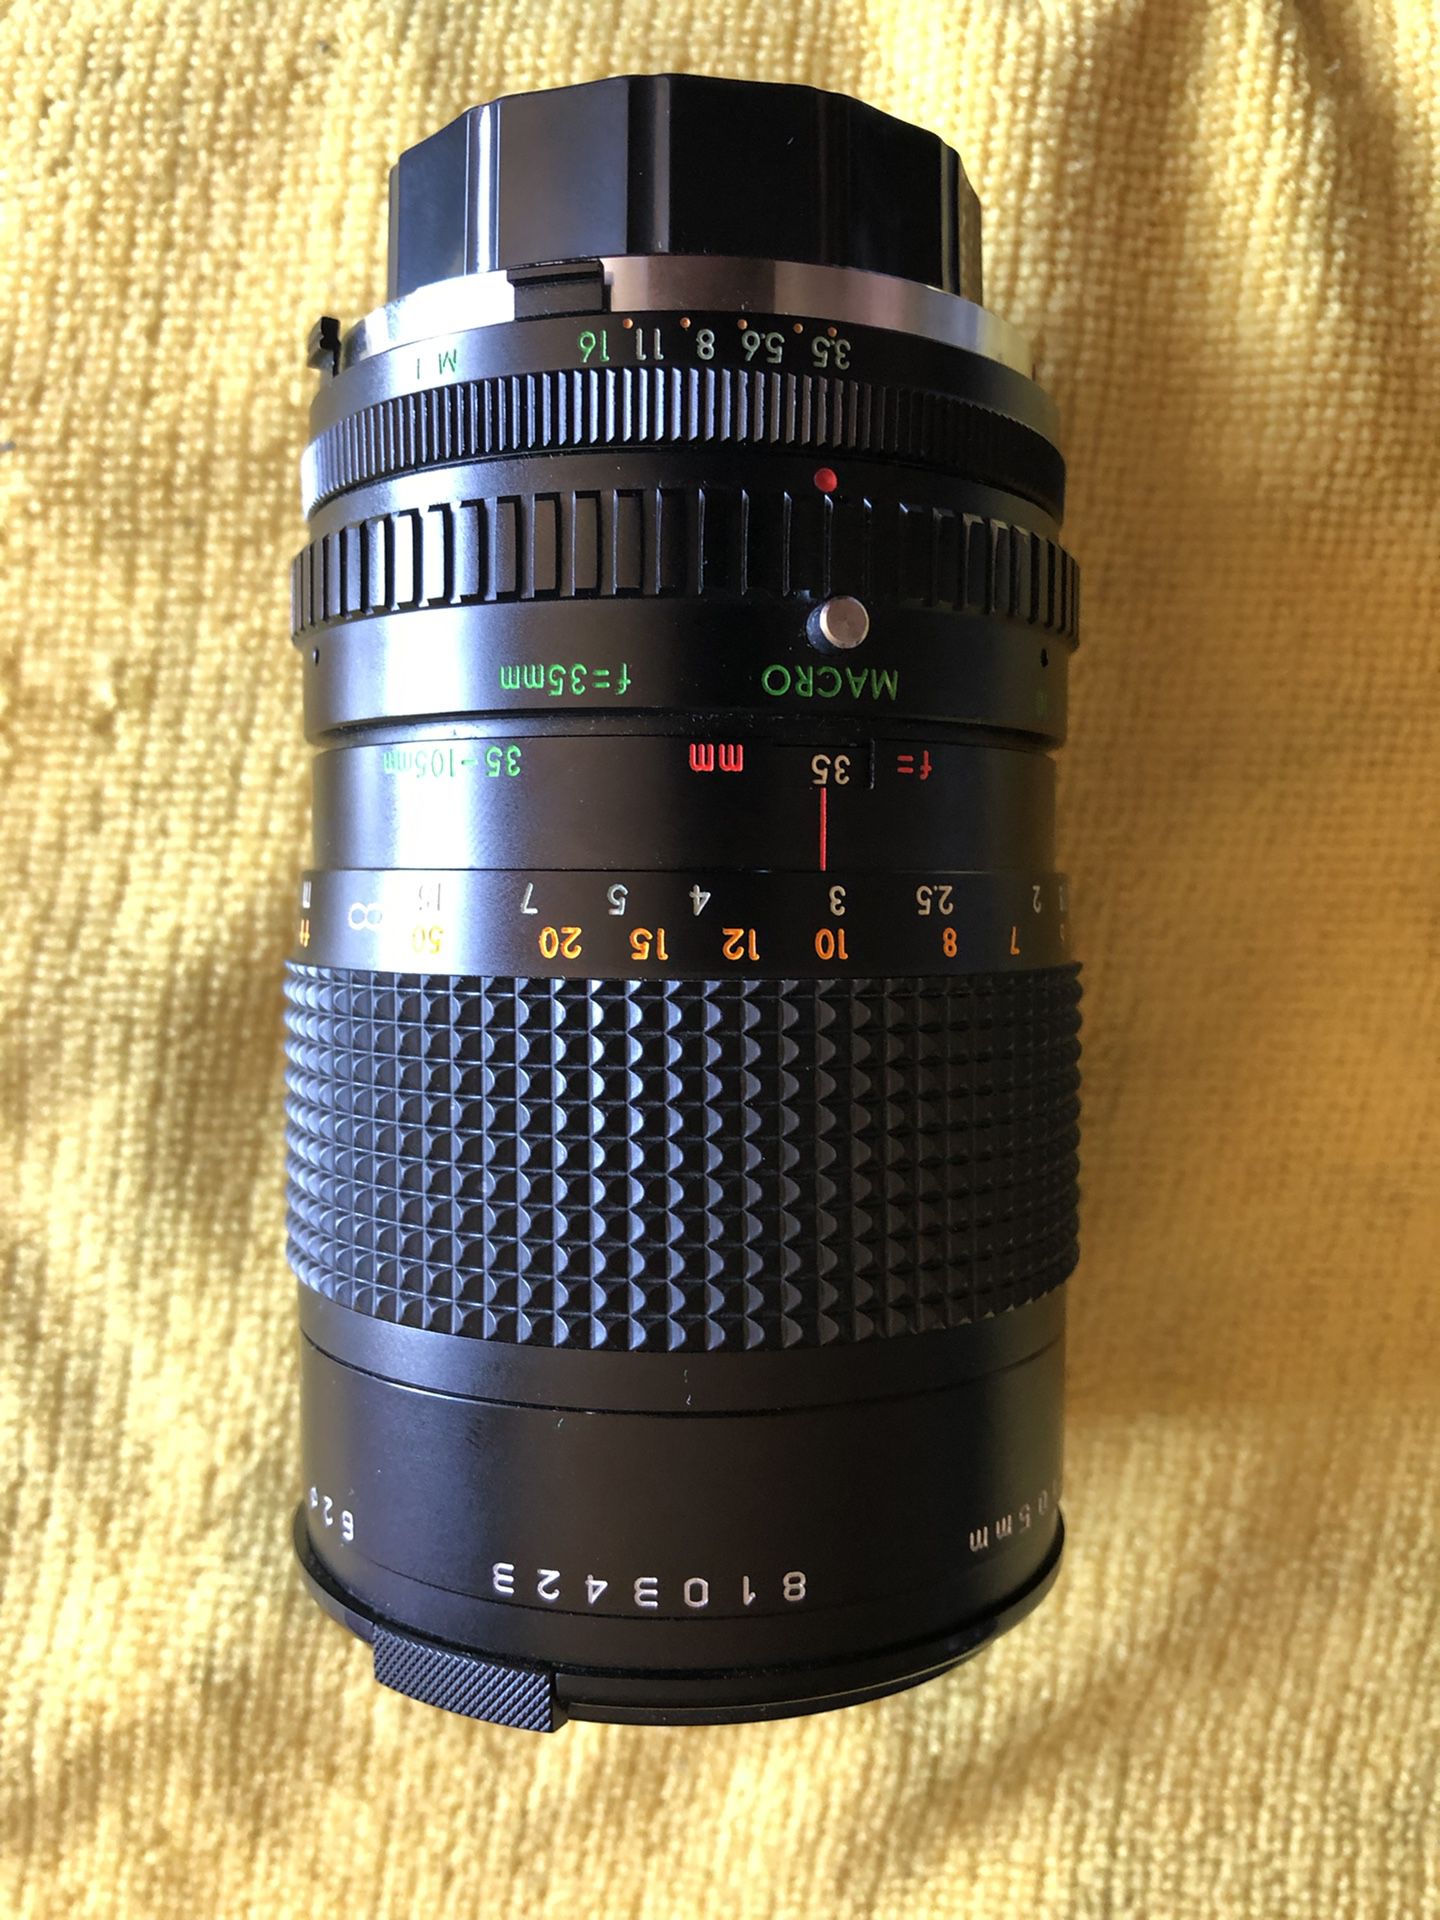 Tou/five star 35-105mm camera lens